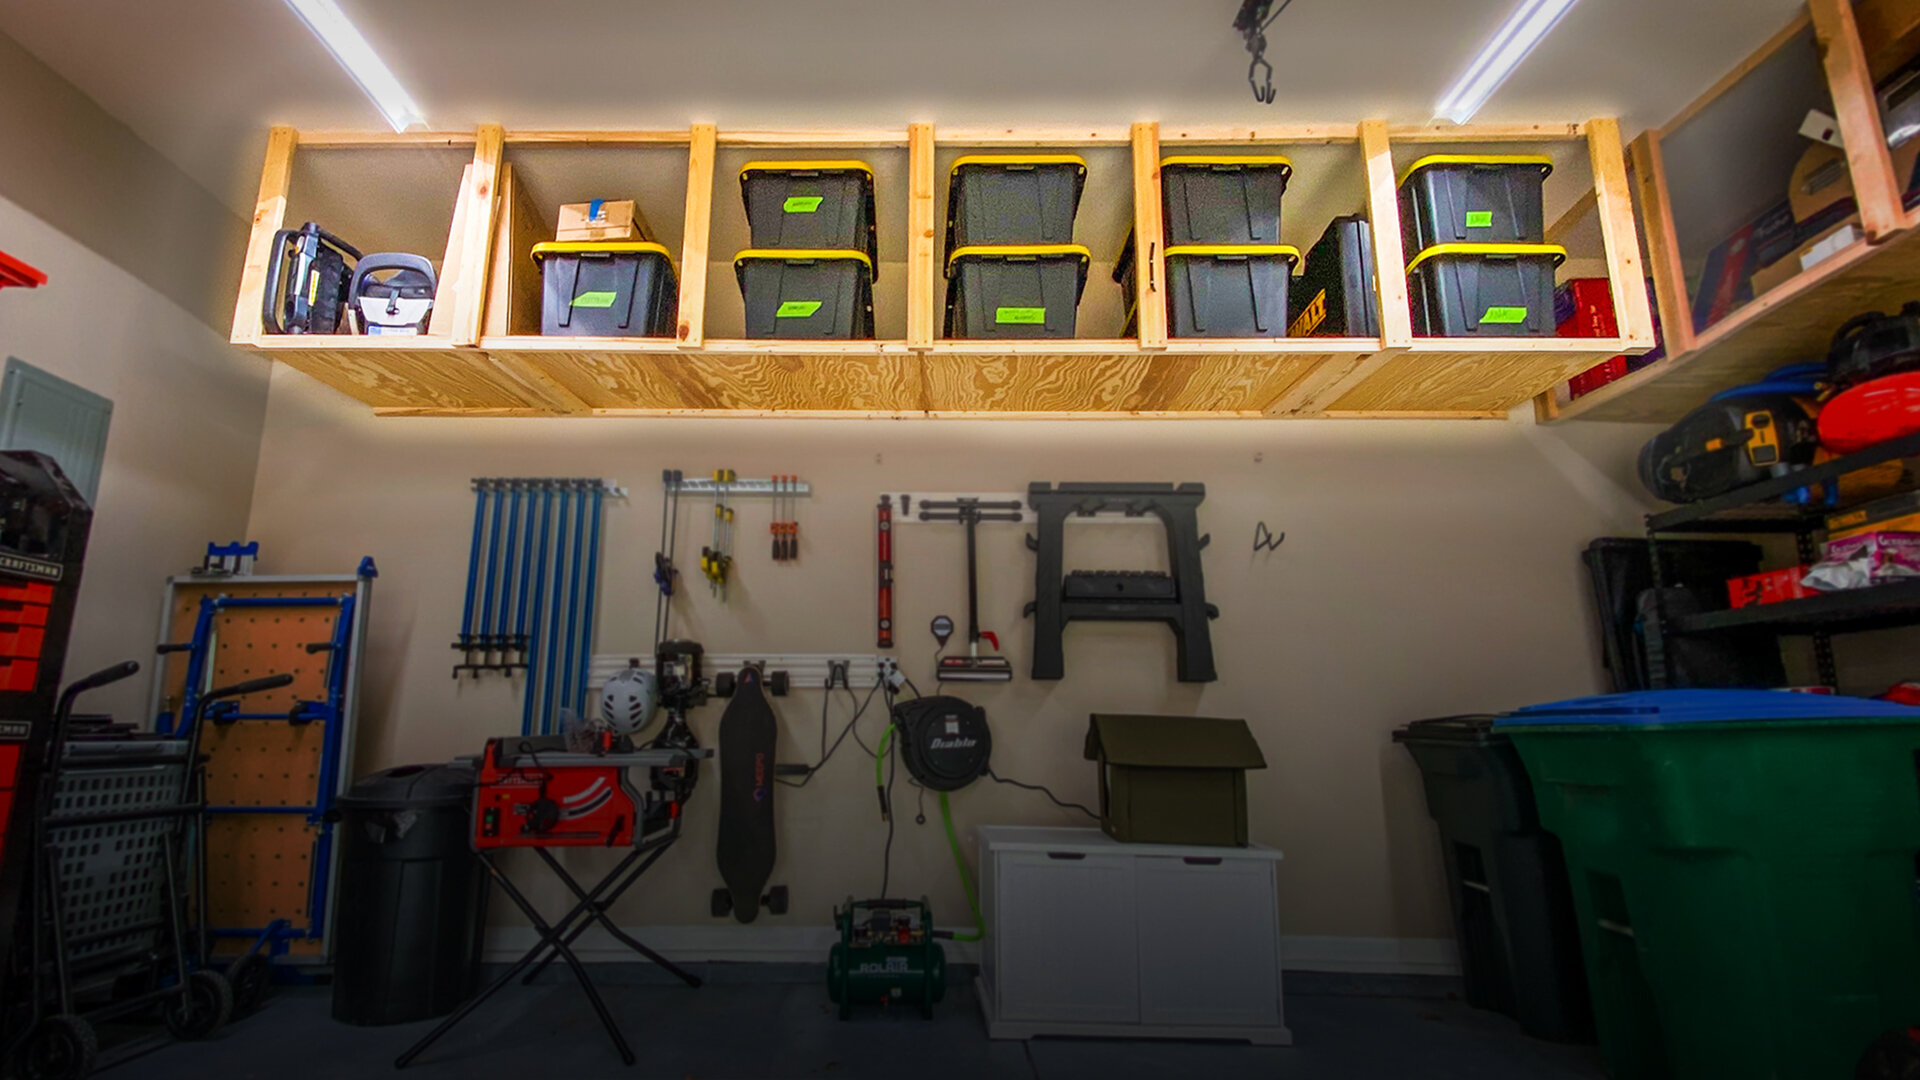 How To Build Diy Garage Storage Shelves, Plans For Building Garage Storage Shelves